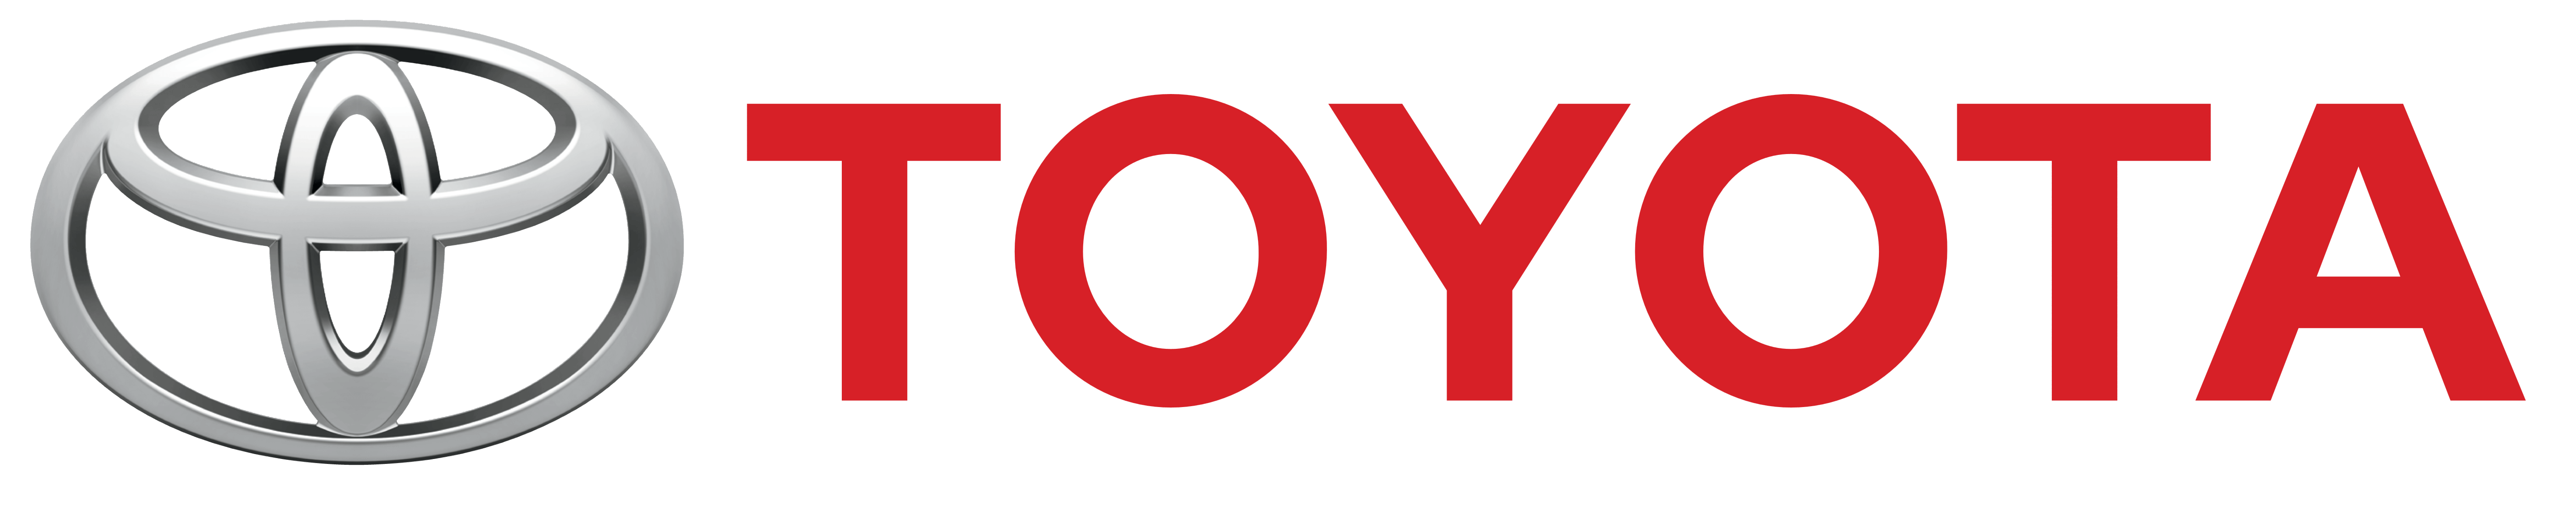 Logo images